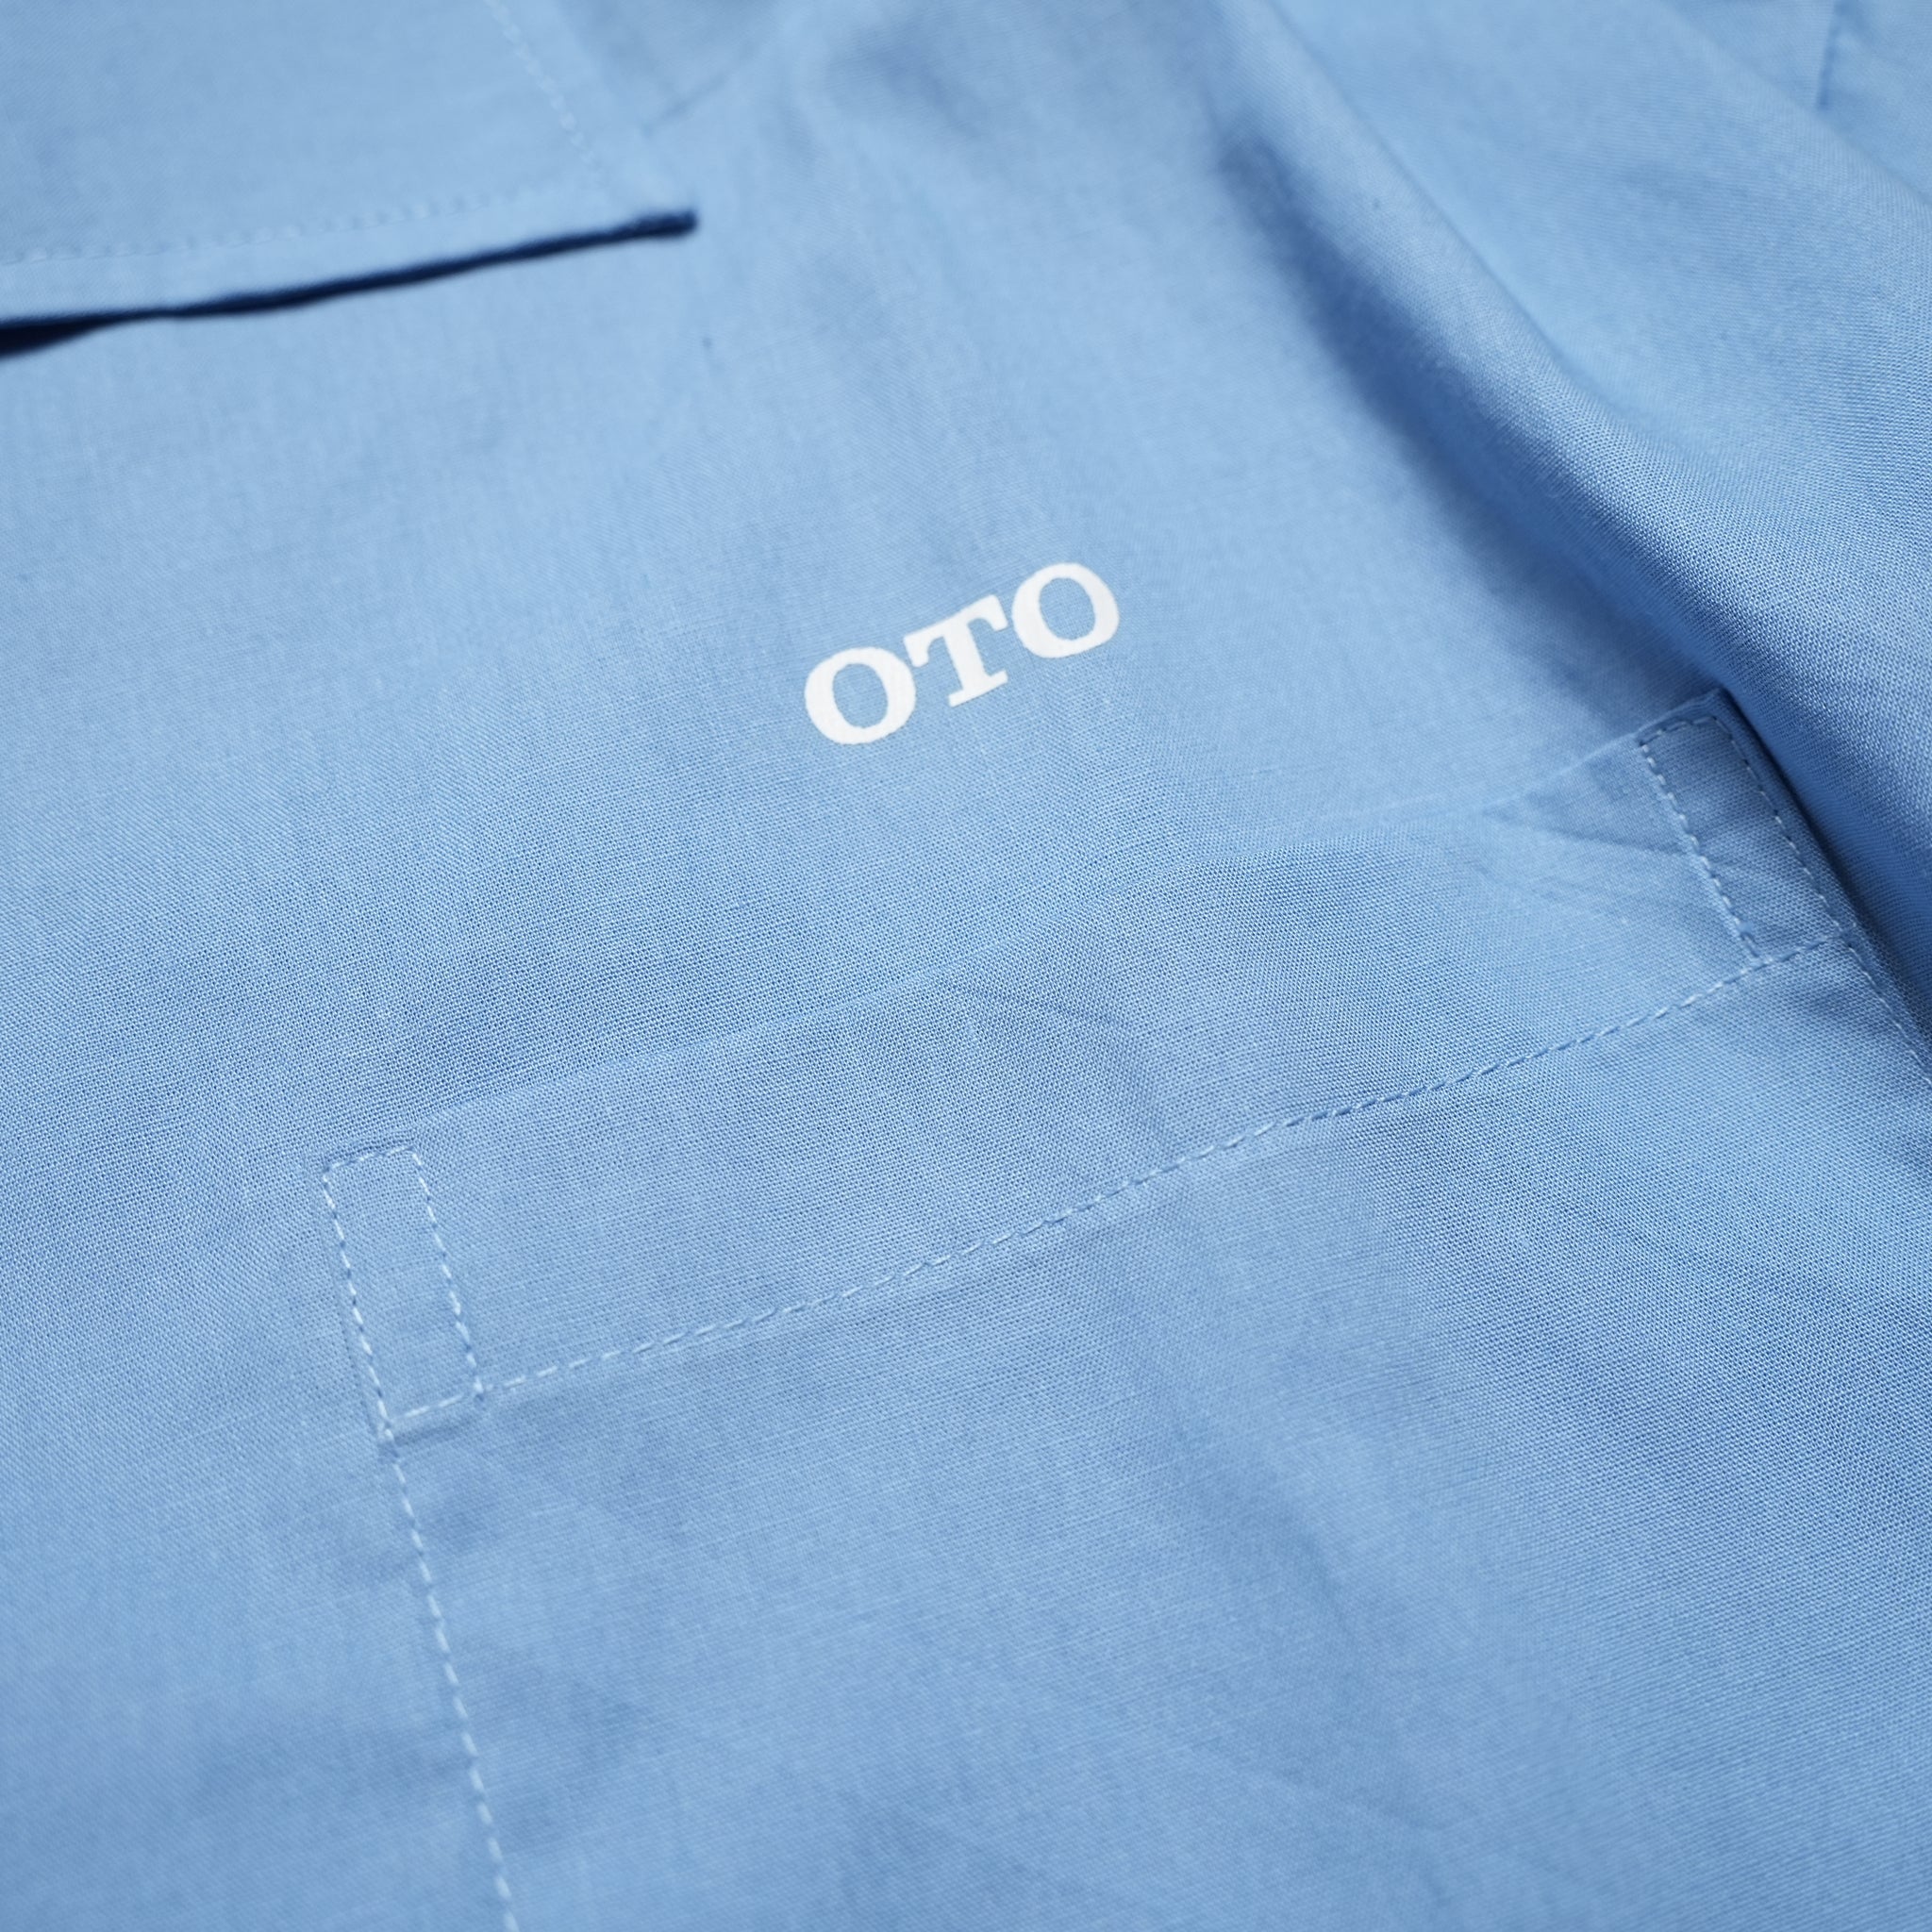 No:ok241-804 | Name:oto shirts | Color:Pink-Loose/Blue-Loose【OK_オーケー】